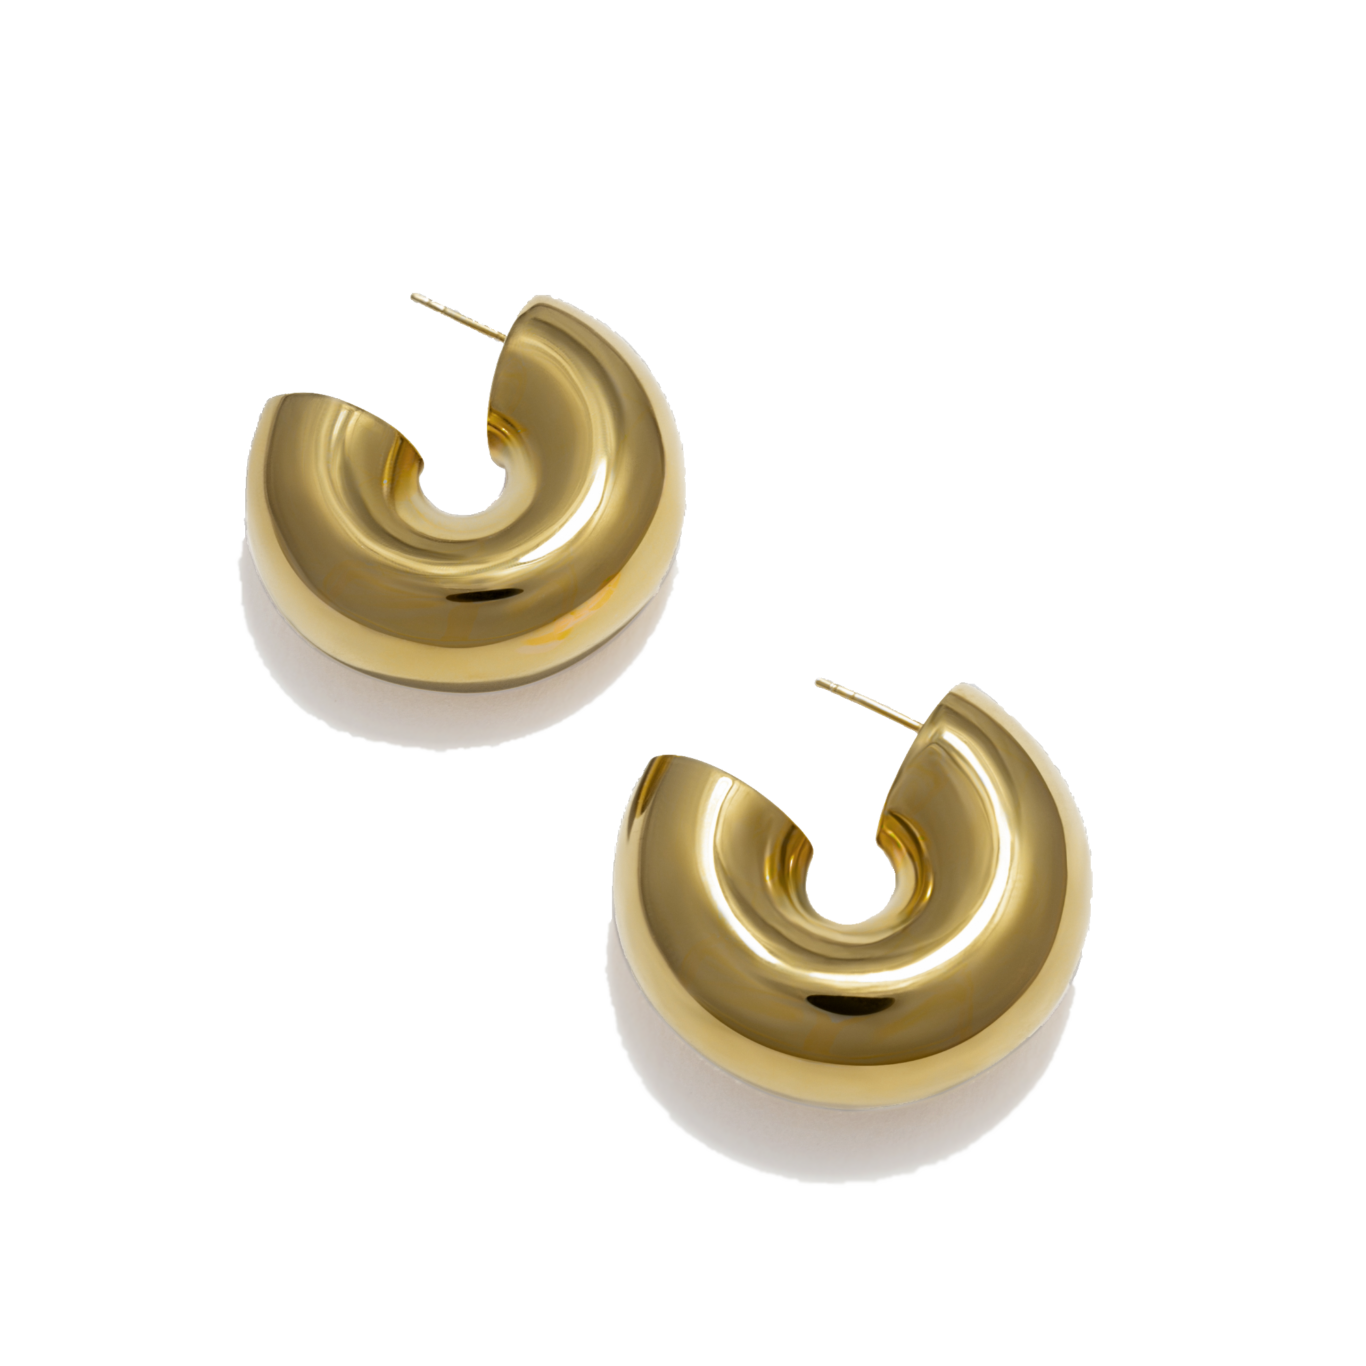 TBOEA03-Beam Earrings - Gold